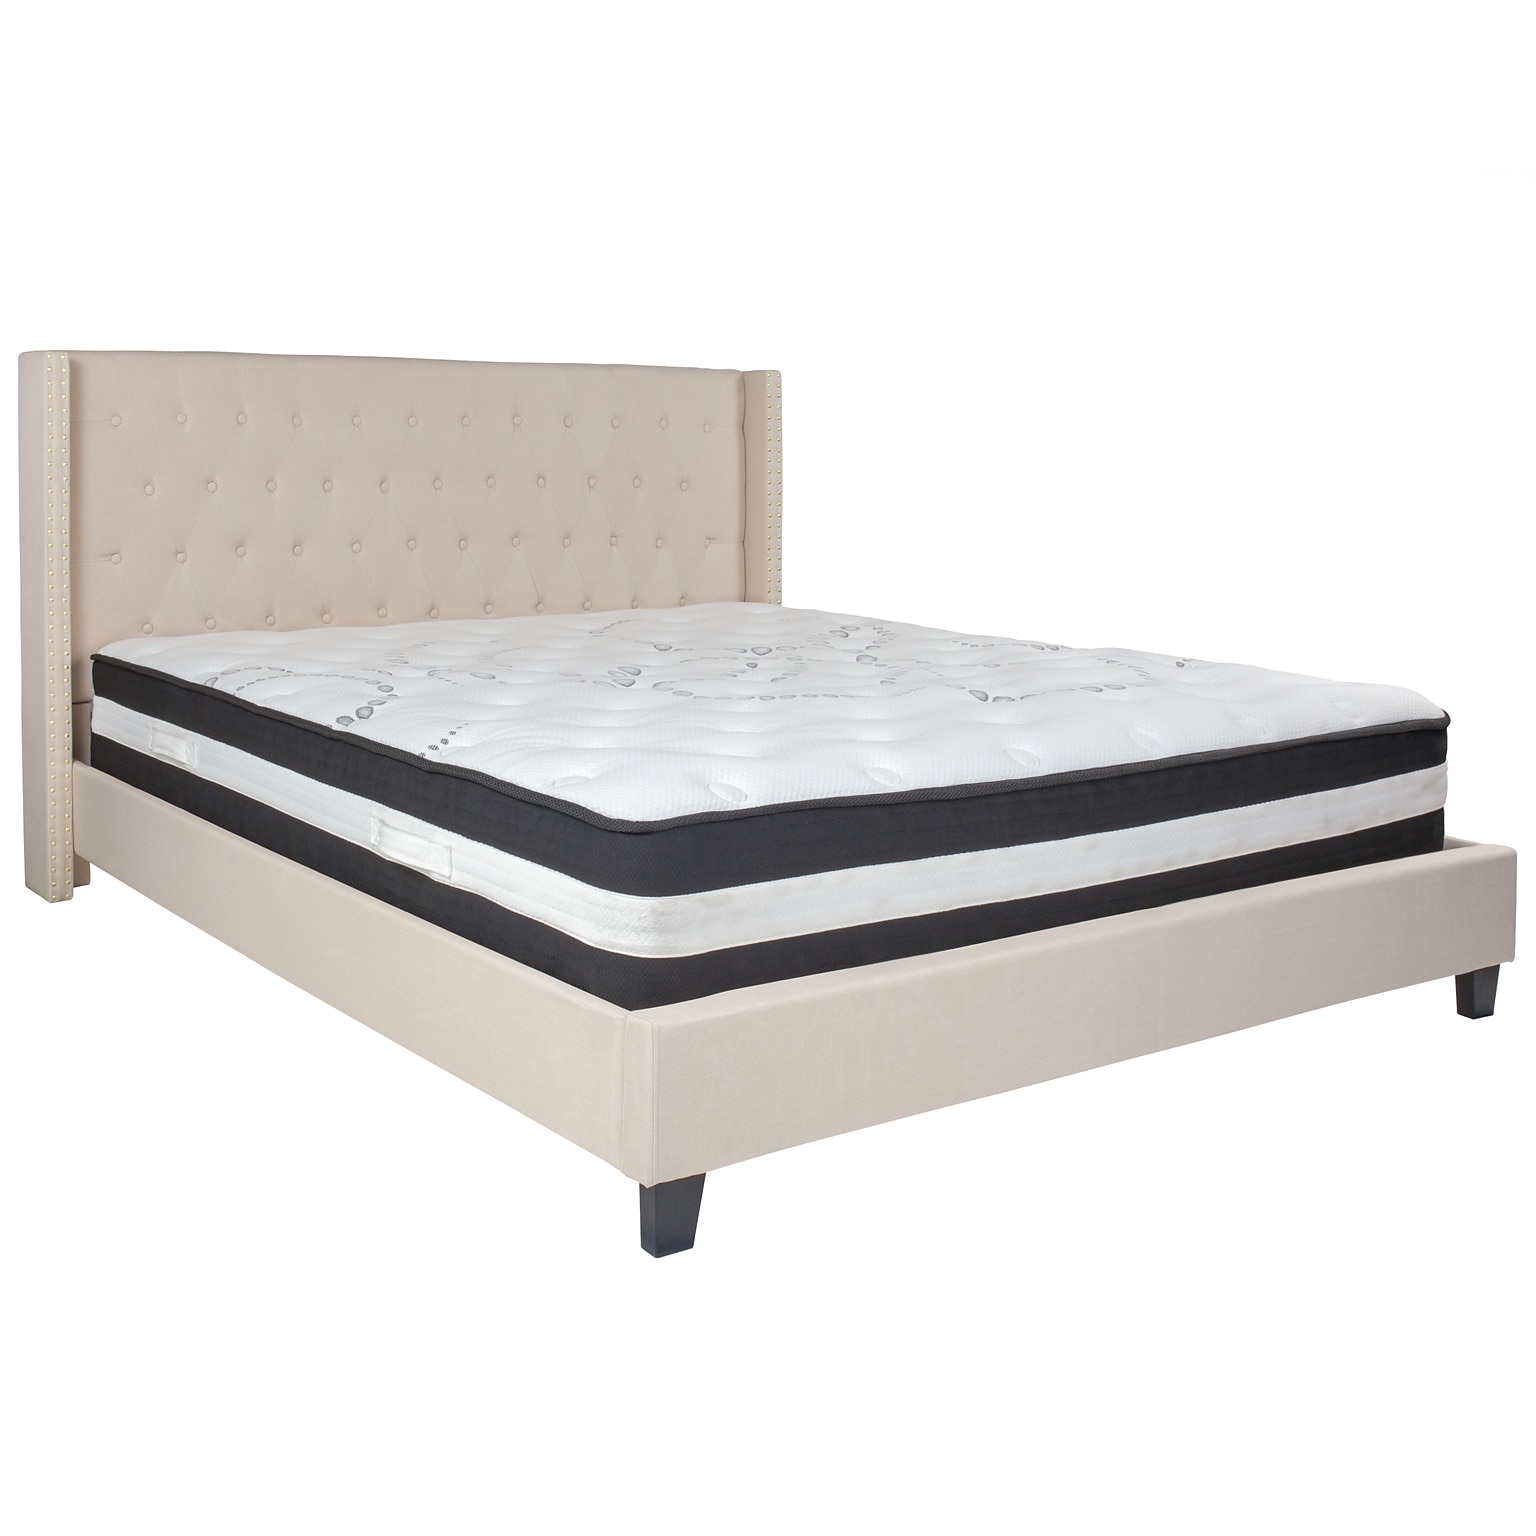 Flash Furniture Riverdale Tufted Upholstered Platform Bed in Beige Fabric with Pocket Spring Mattress, King (HGBM36)